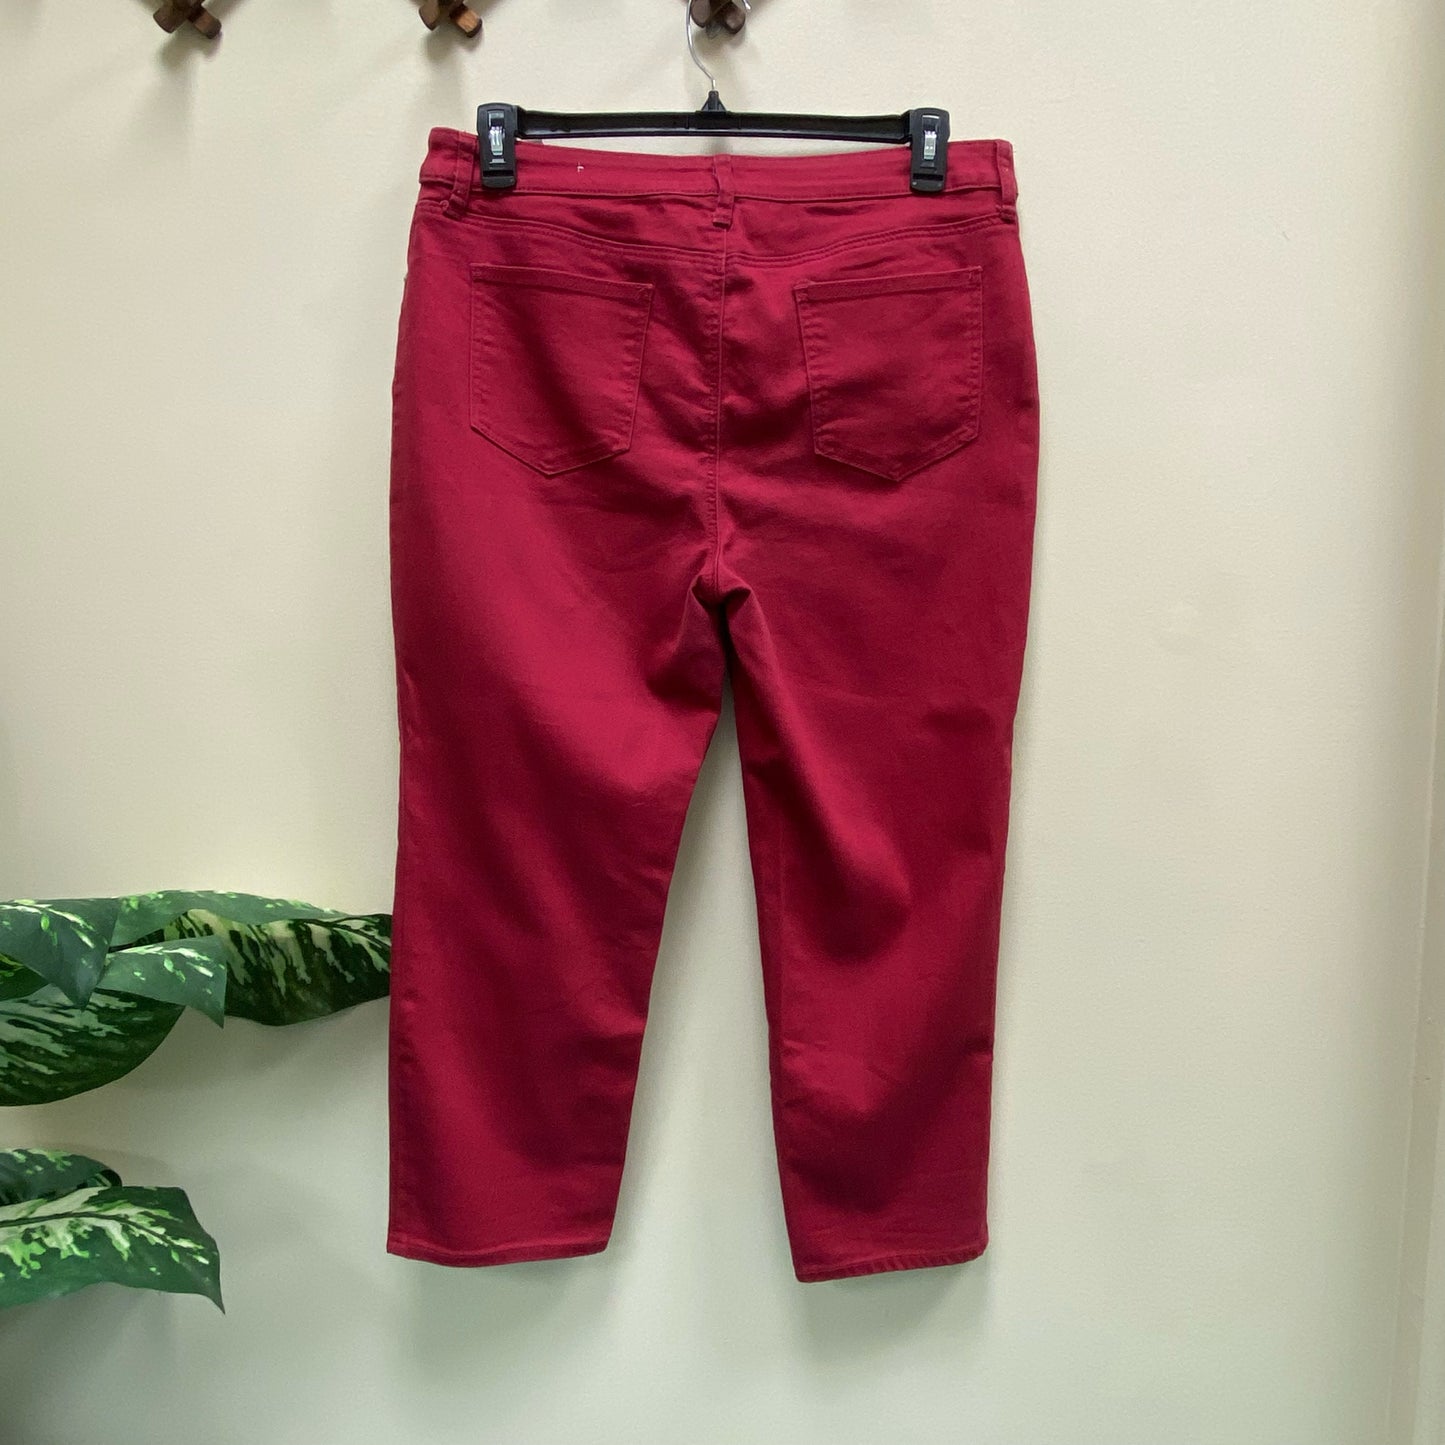 Chico's Slim Leg Crop Jeans - Size 14